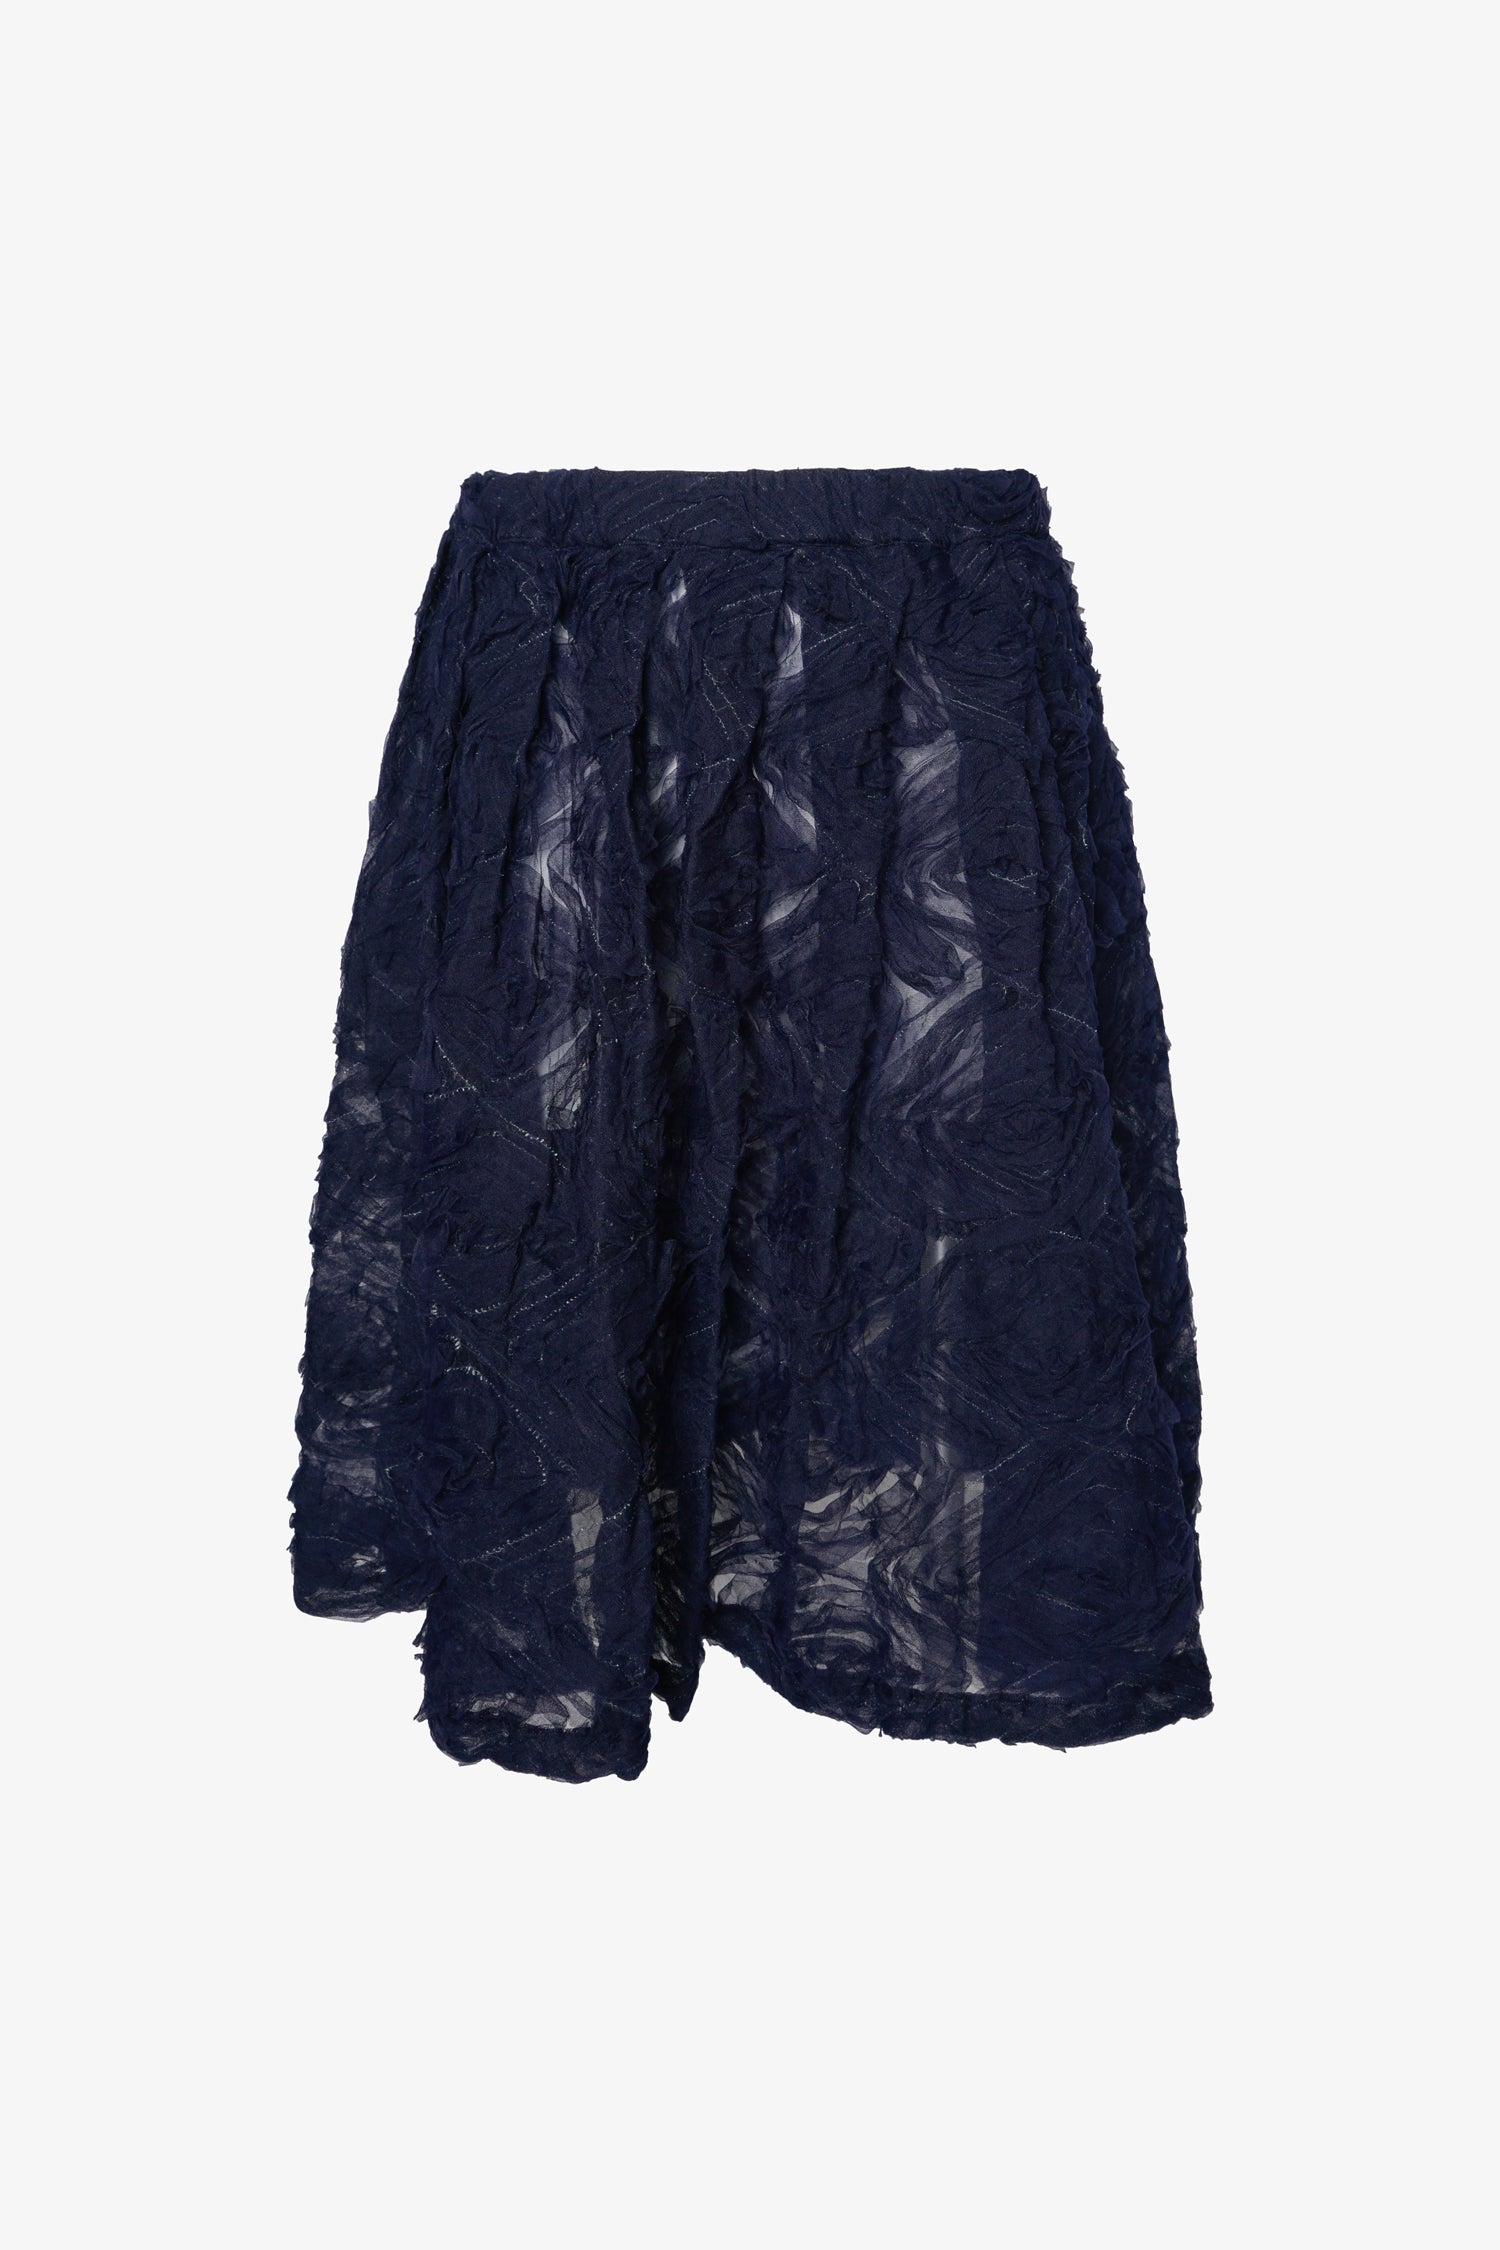 Selectshop FRAME - COMME DES GARÇONS GIRL Semi-Sheer Textured Skirt Bottoms Dubai